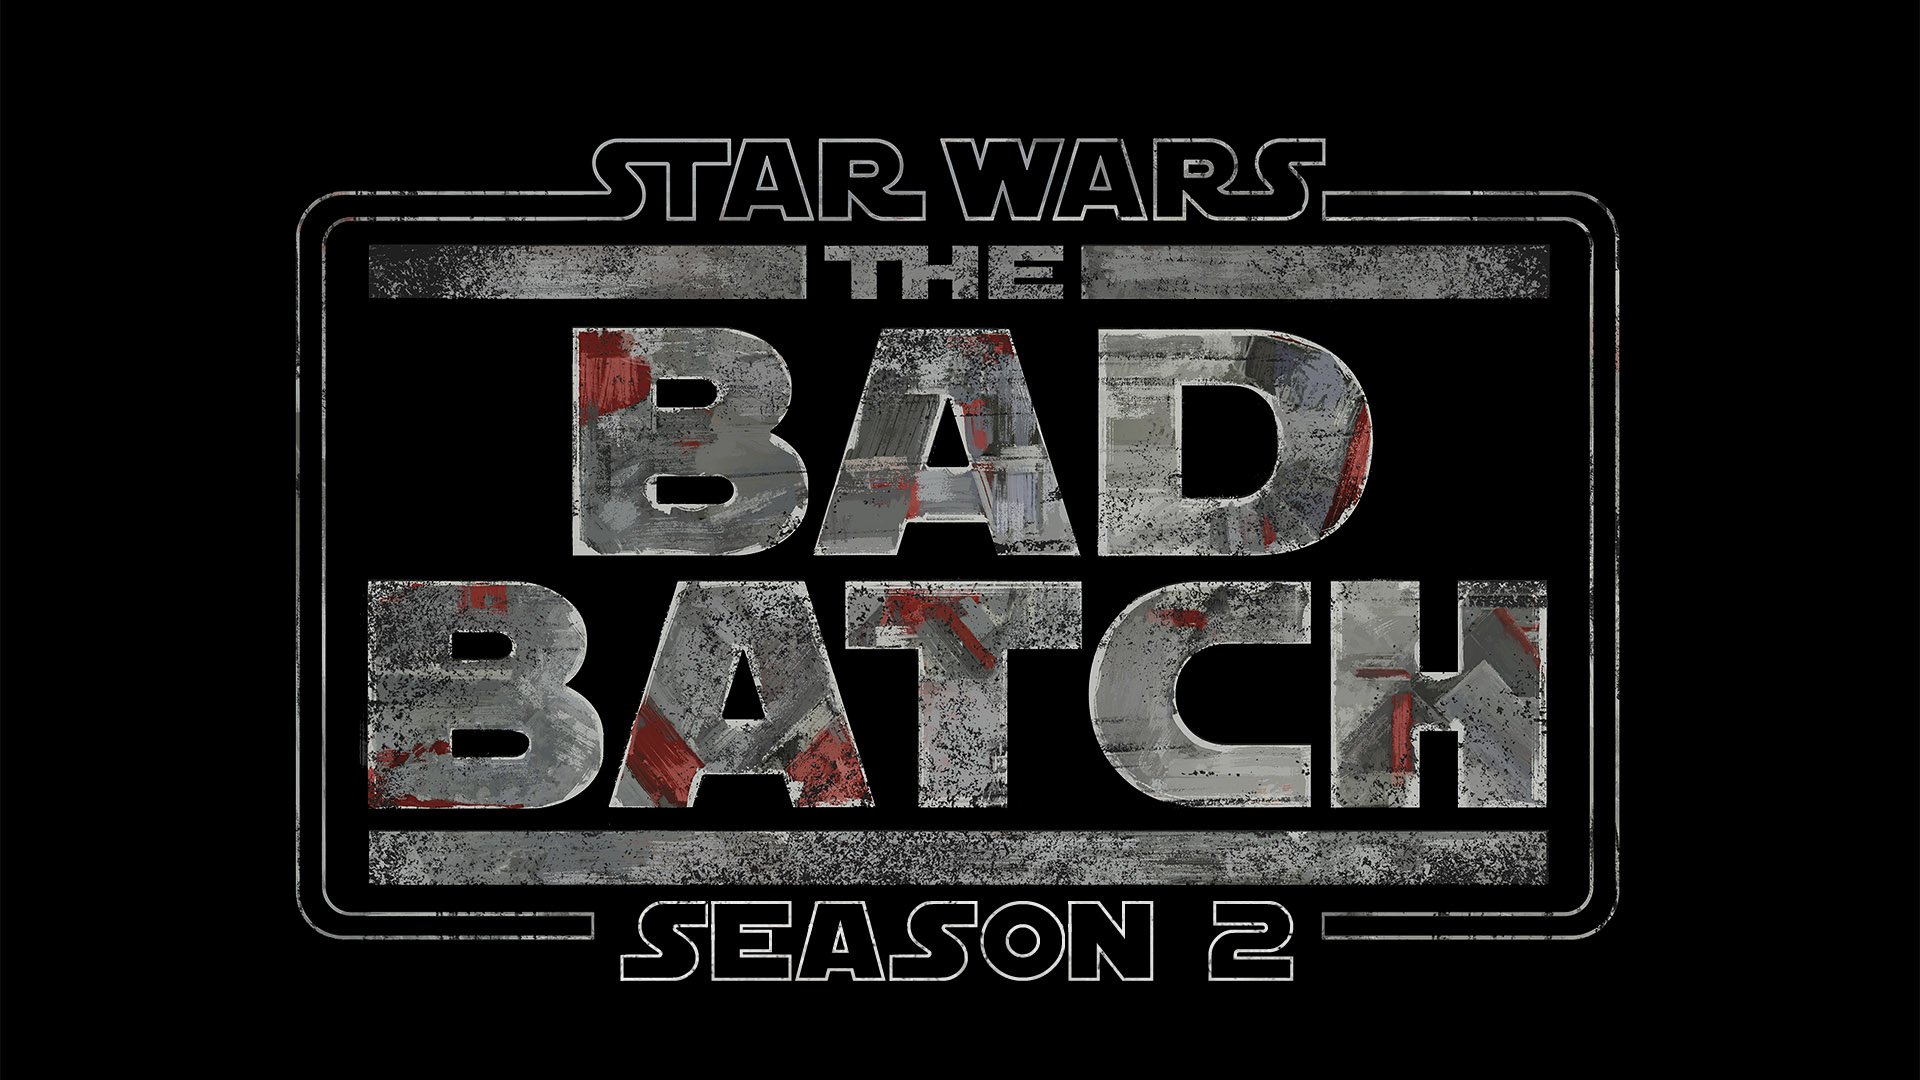 Star Wars: The Bad Batch season 2